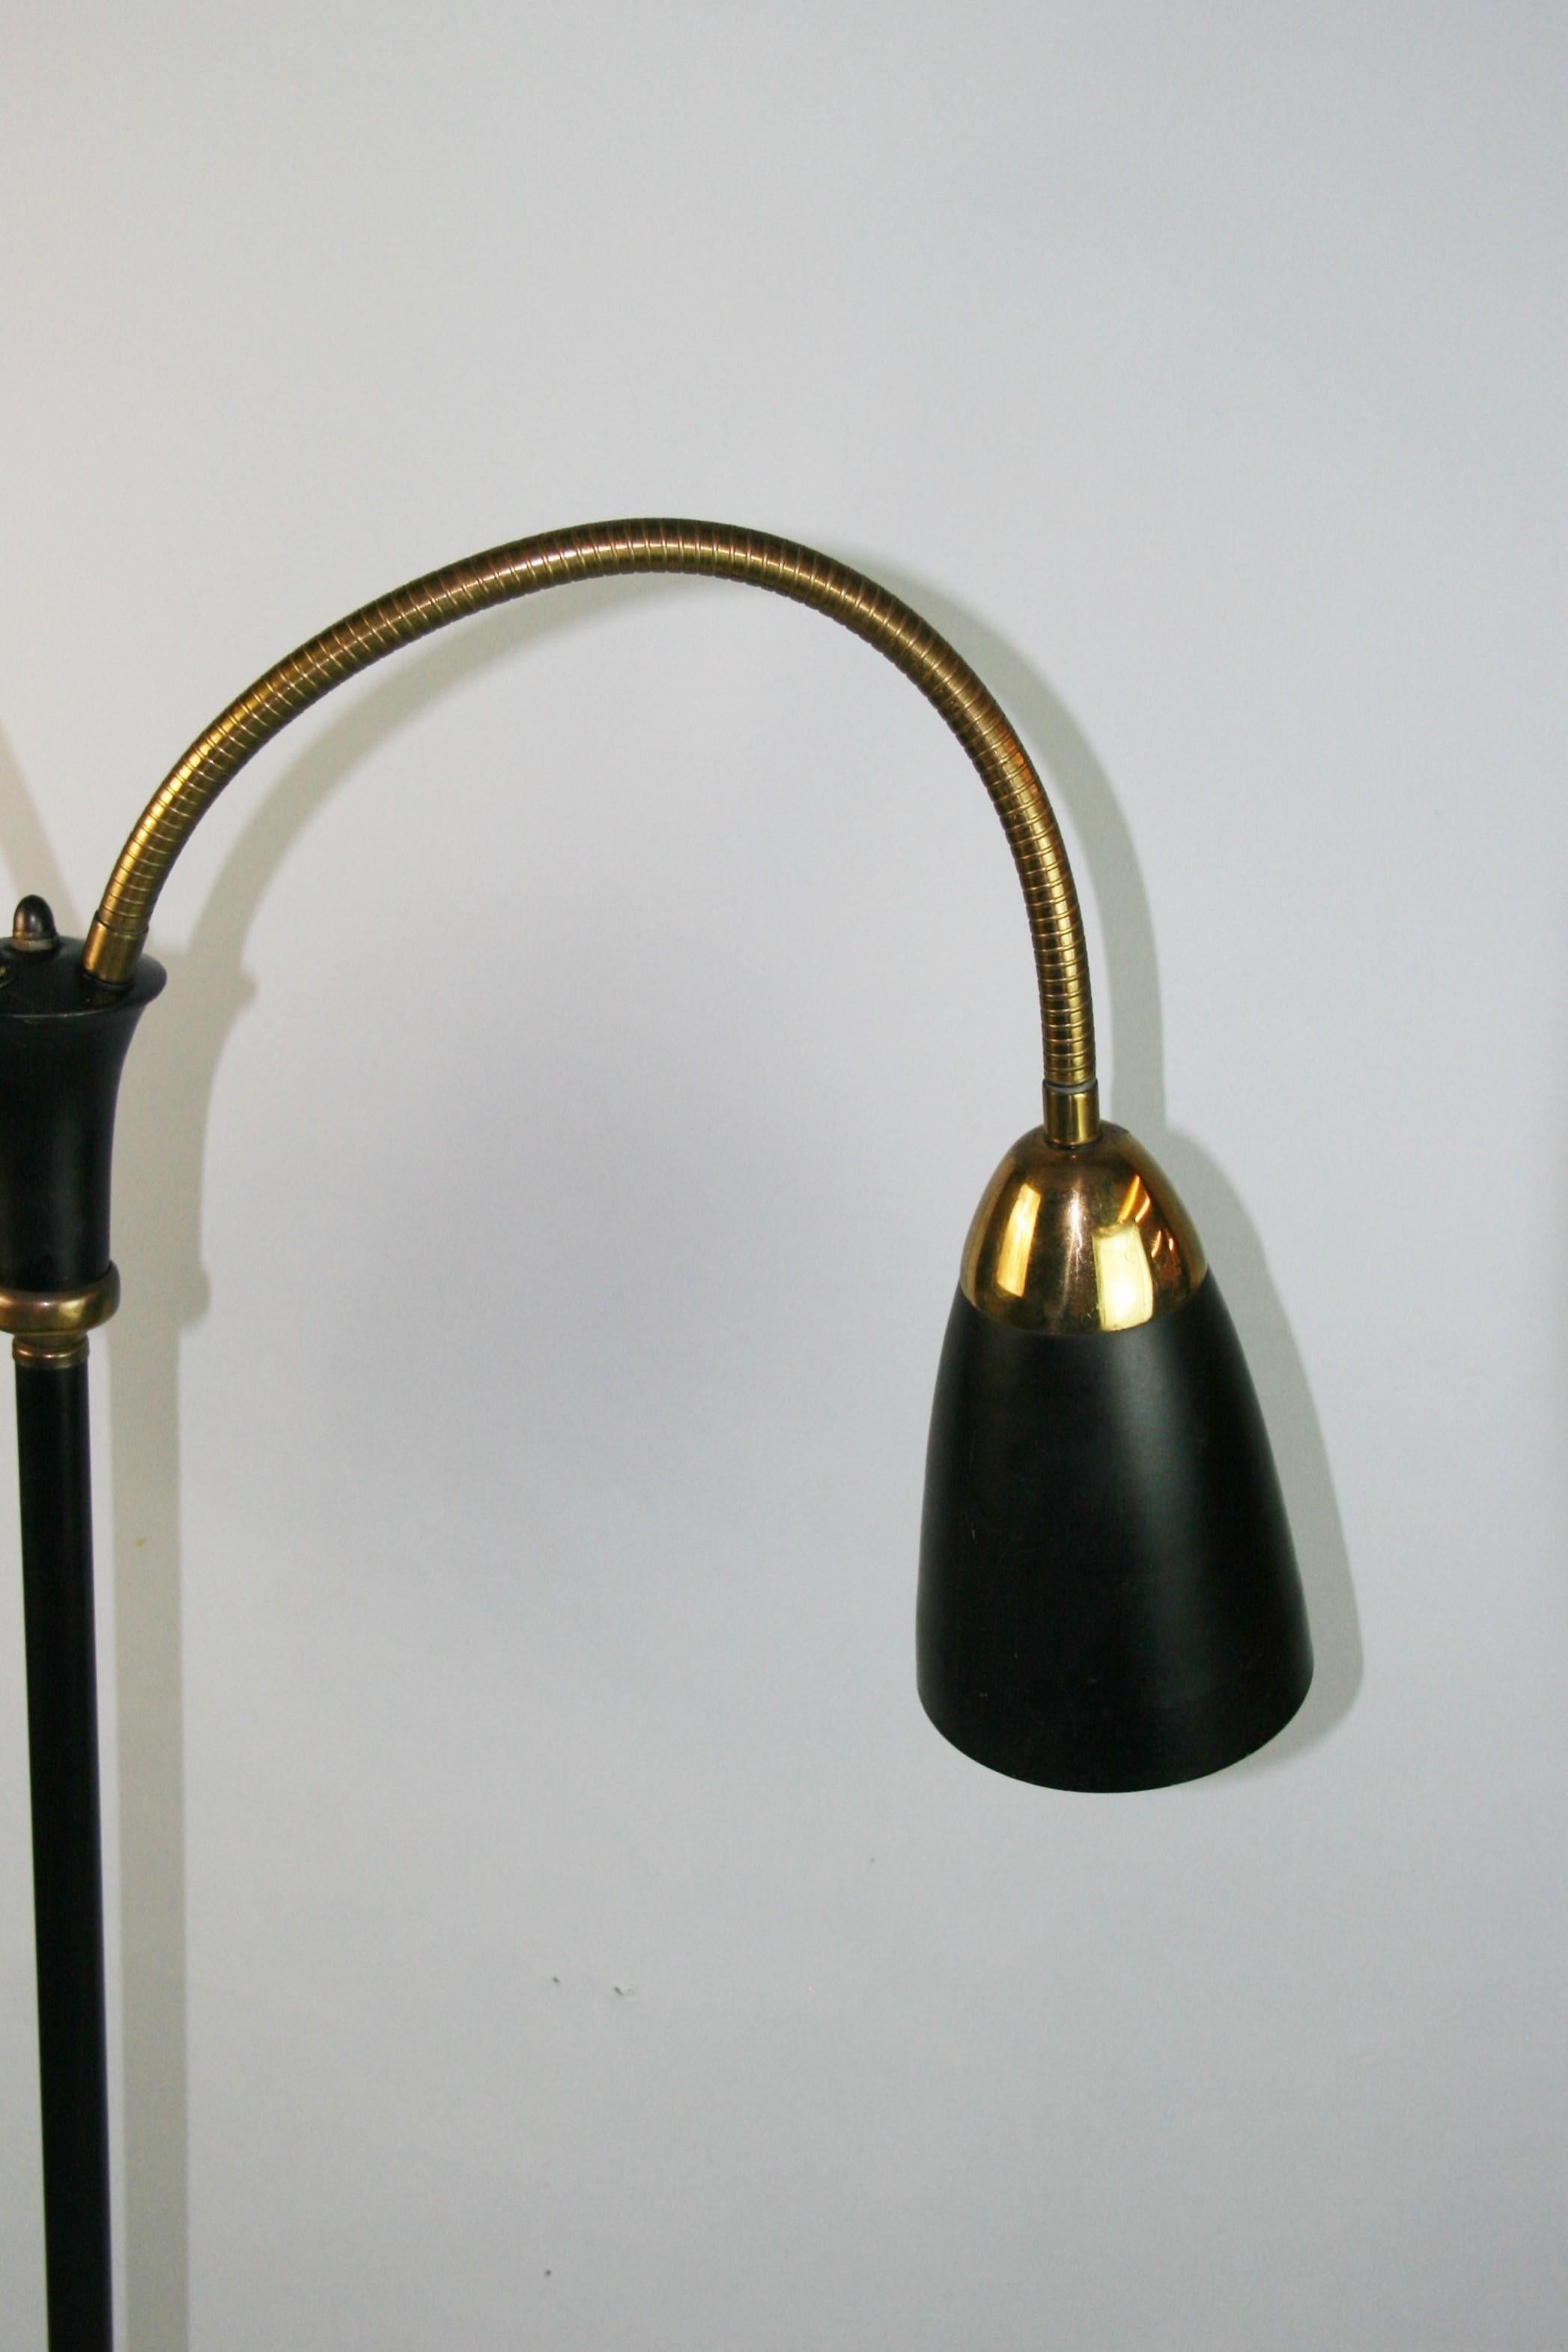 Mid-20th Century Italian Designer Flexible Arm Brass and Metal Floor Lamp 1950's For Sale